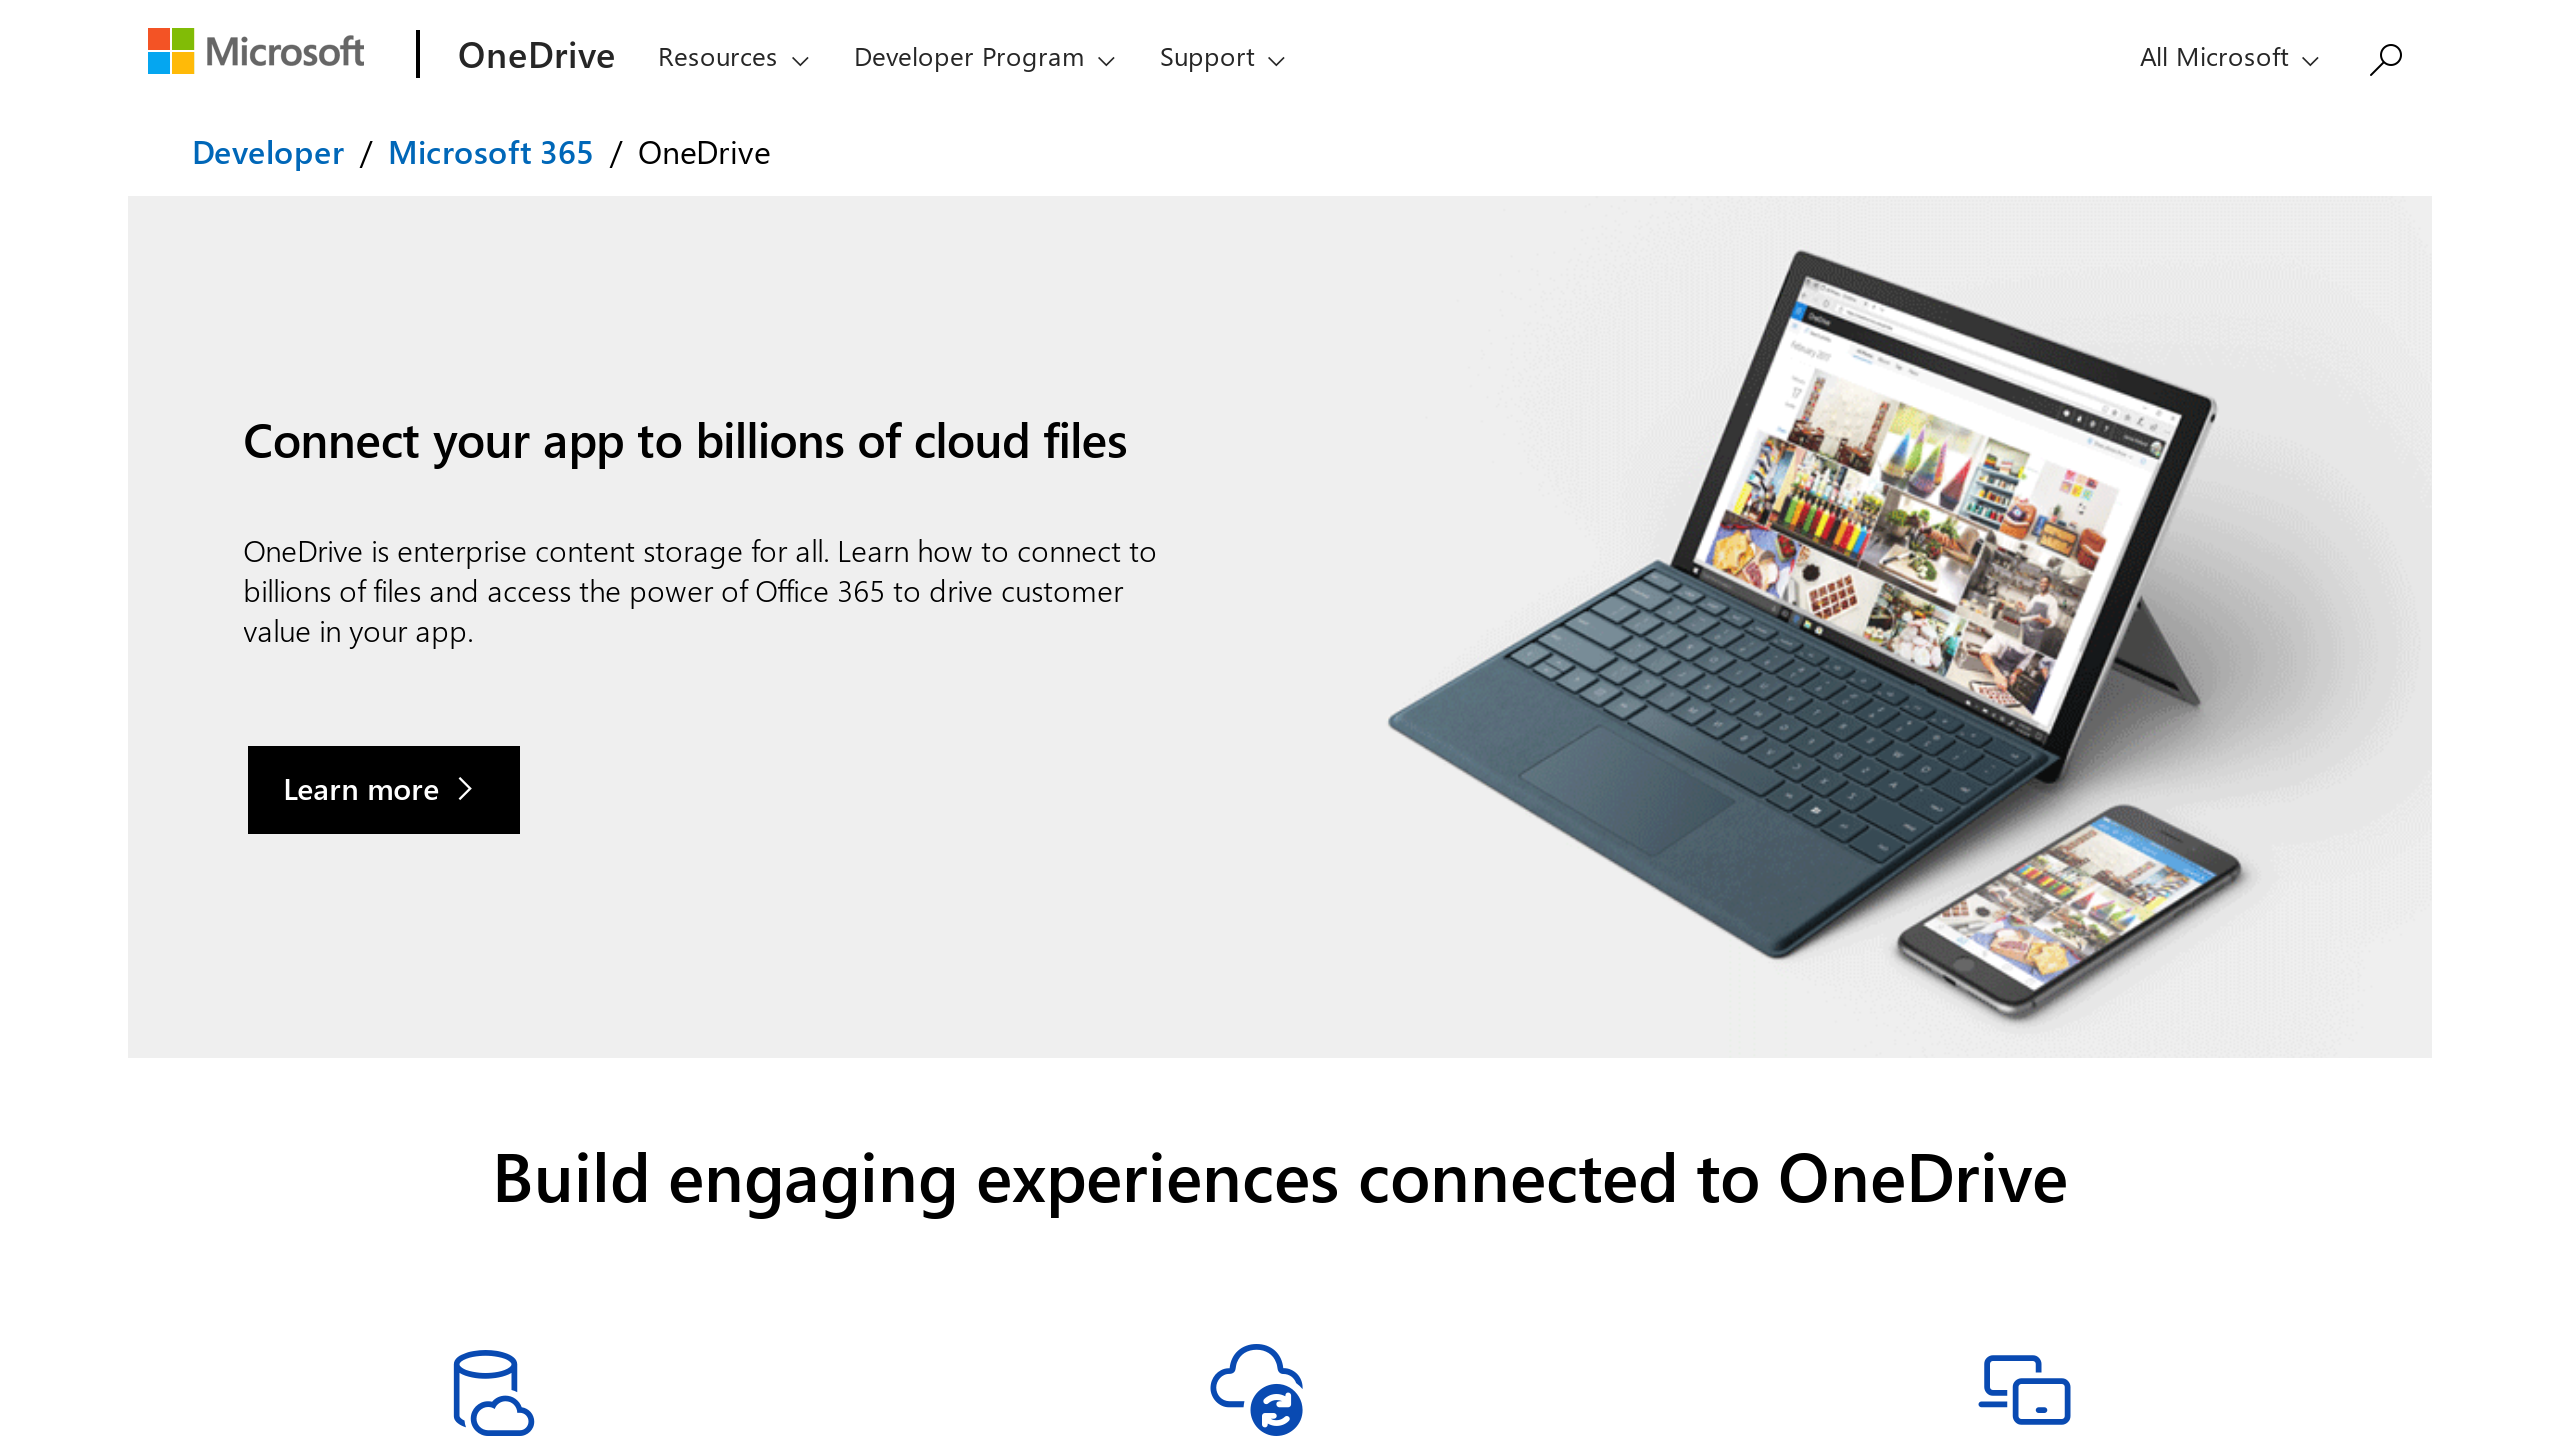 OneDrive's website screenshot